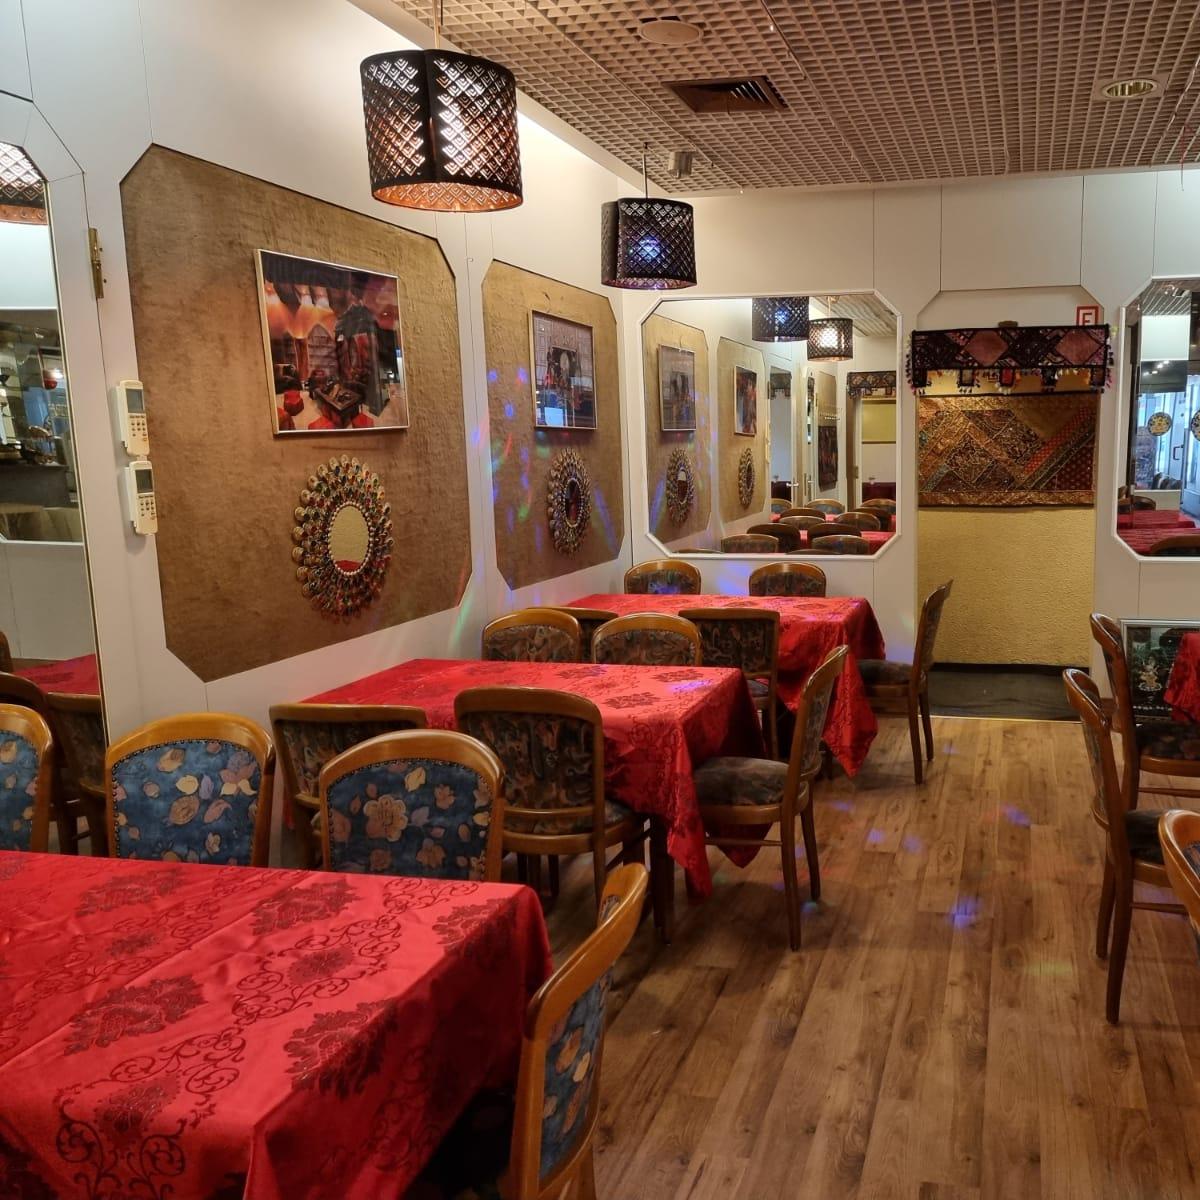 Restaurant "Royal Tandoori Indian Restaurant" in Dortmund